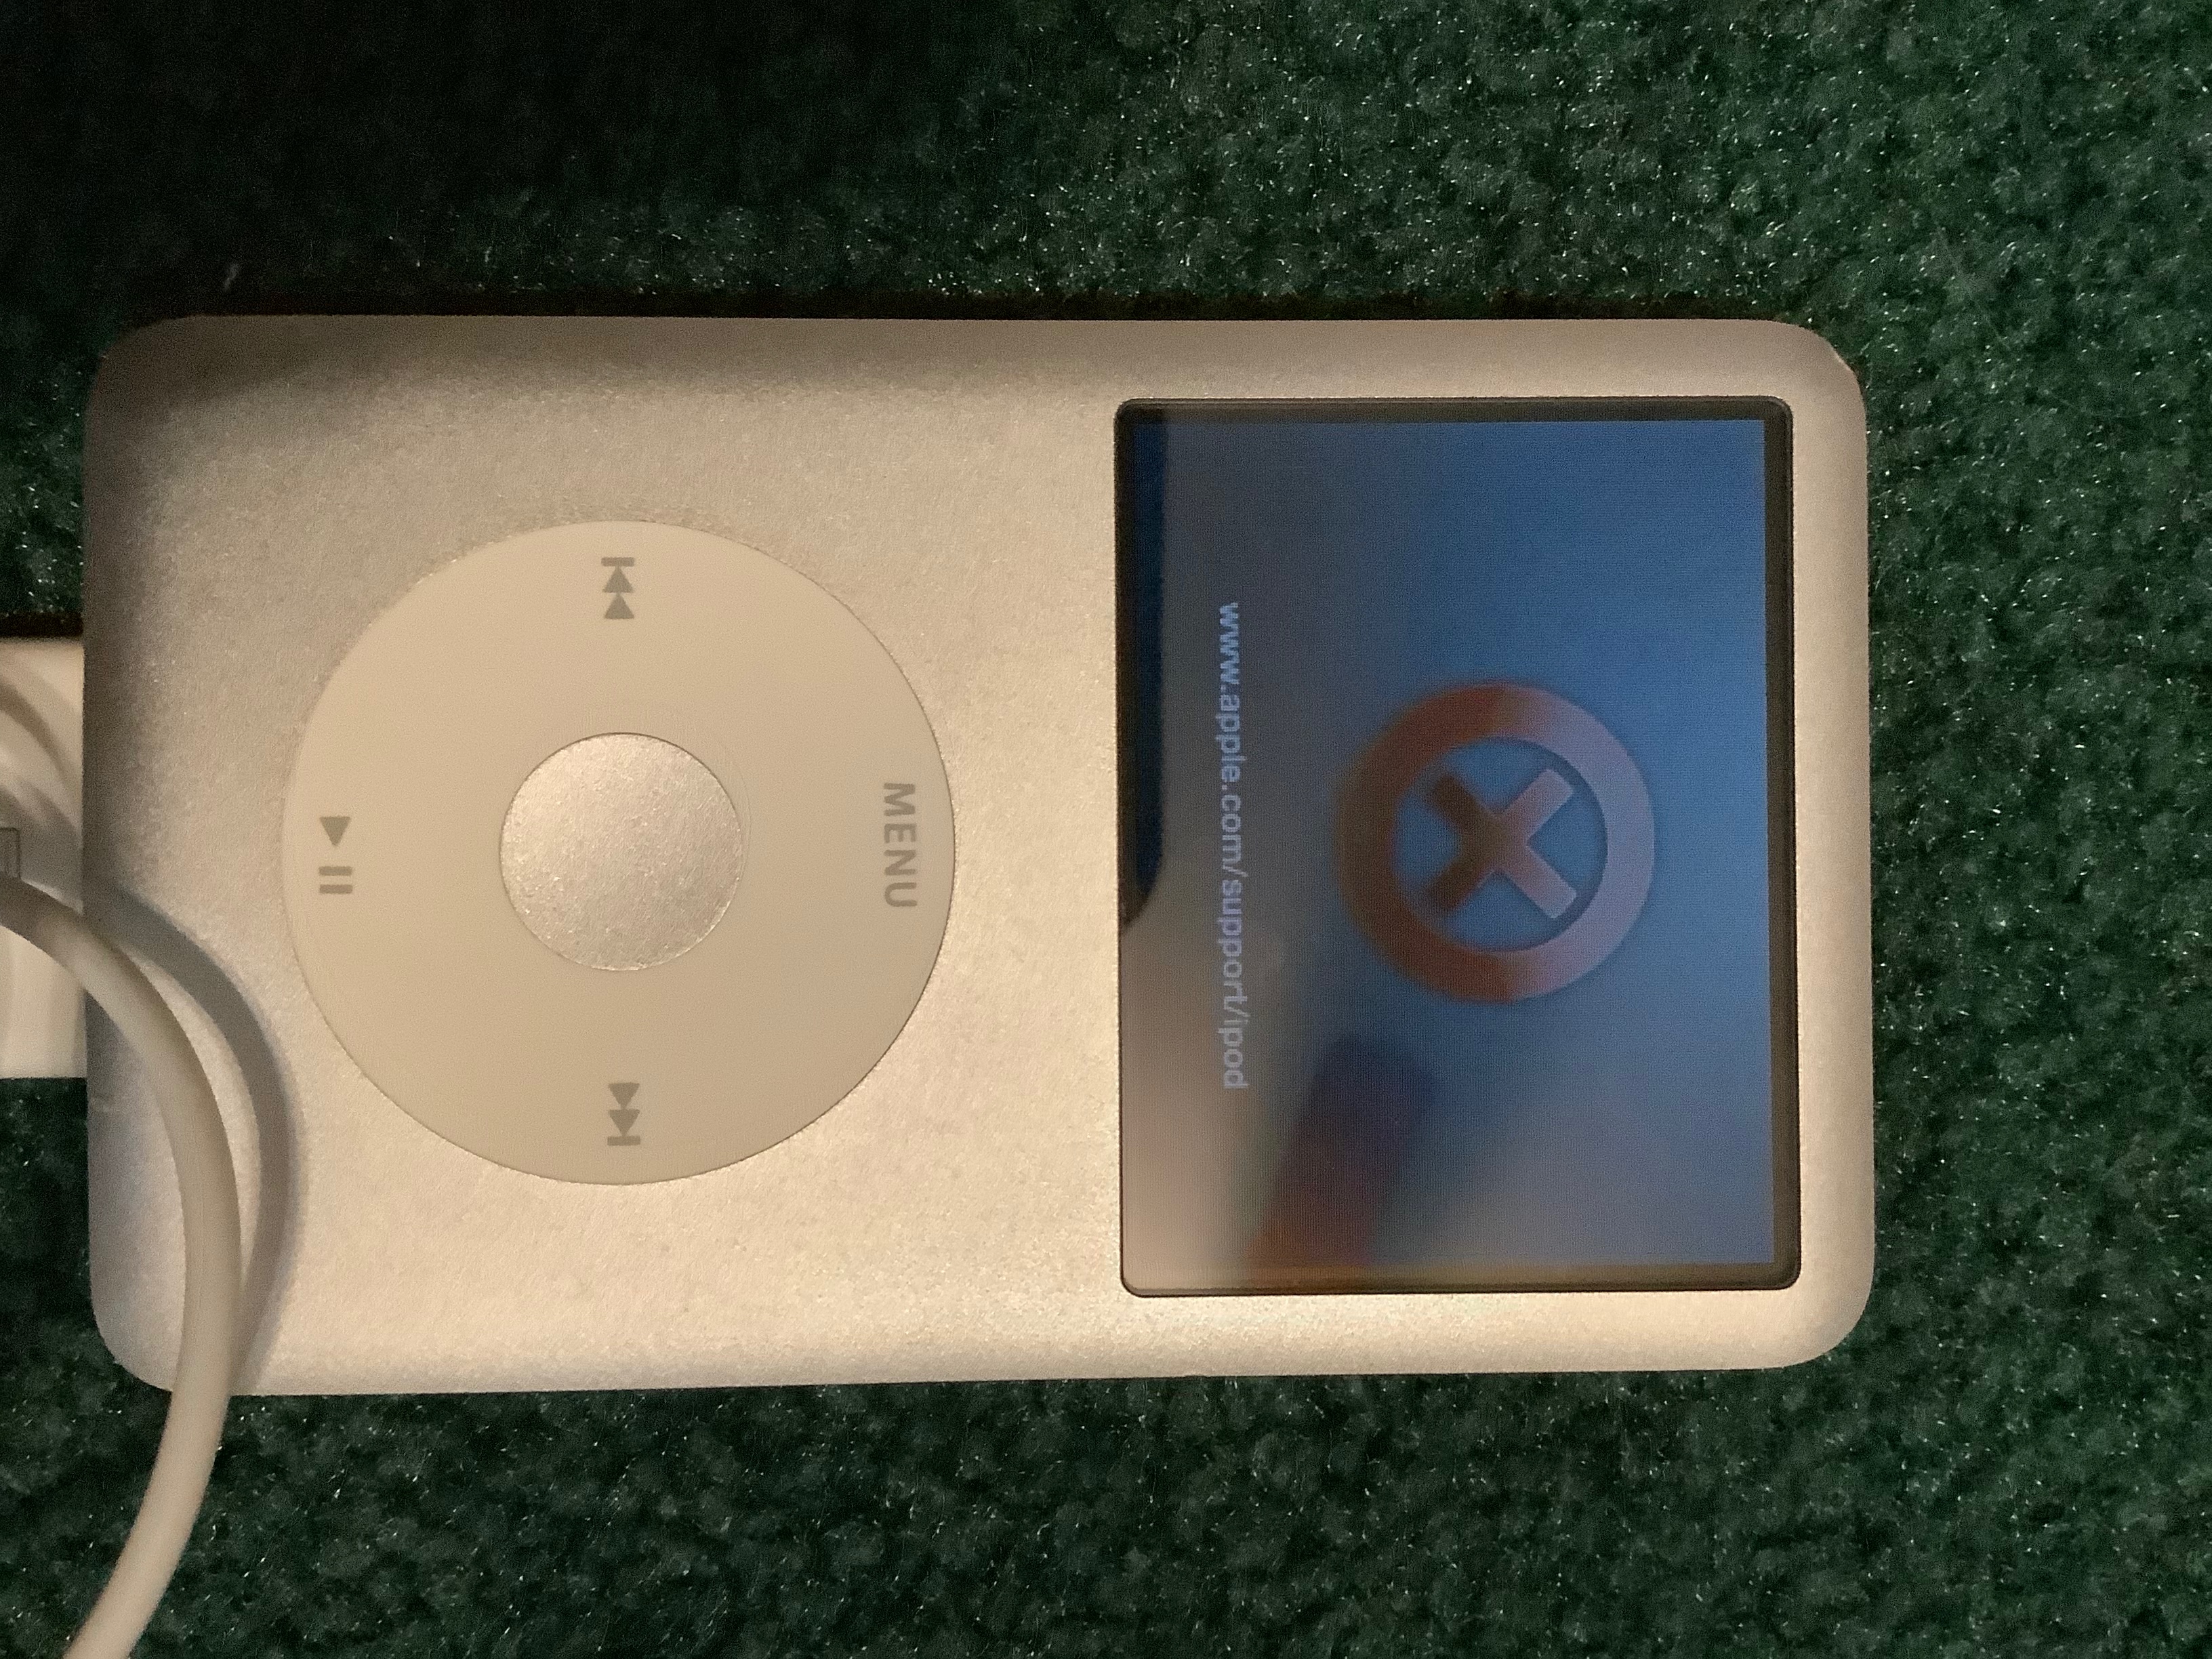 Apple now considers final iPod nano model 'vintage